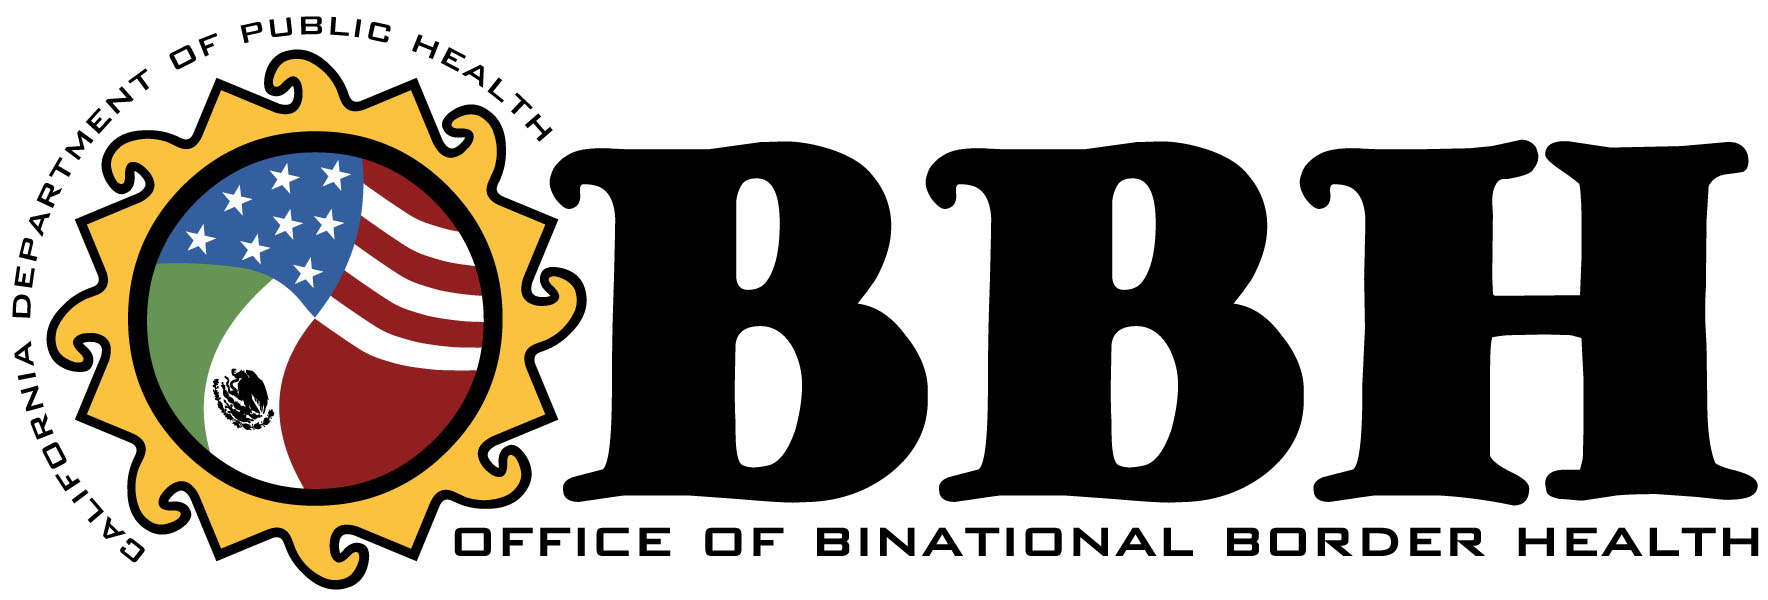 Office of Binational Border Health Logo